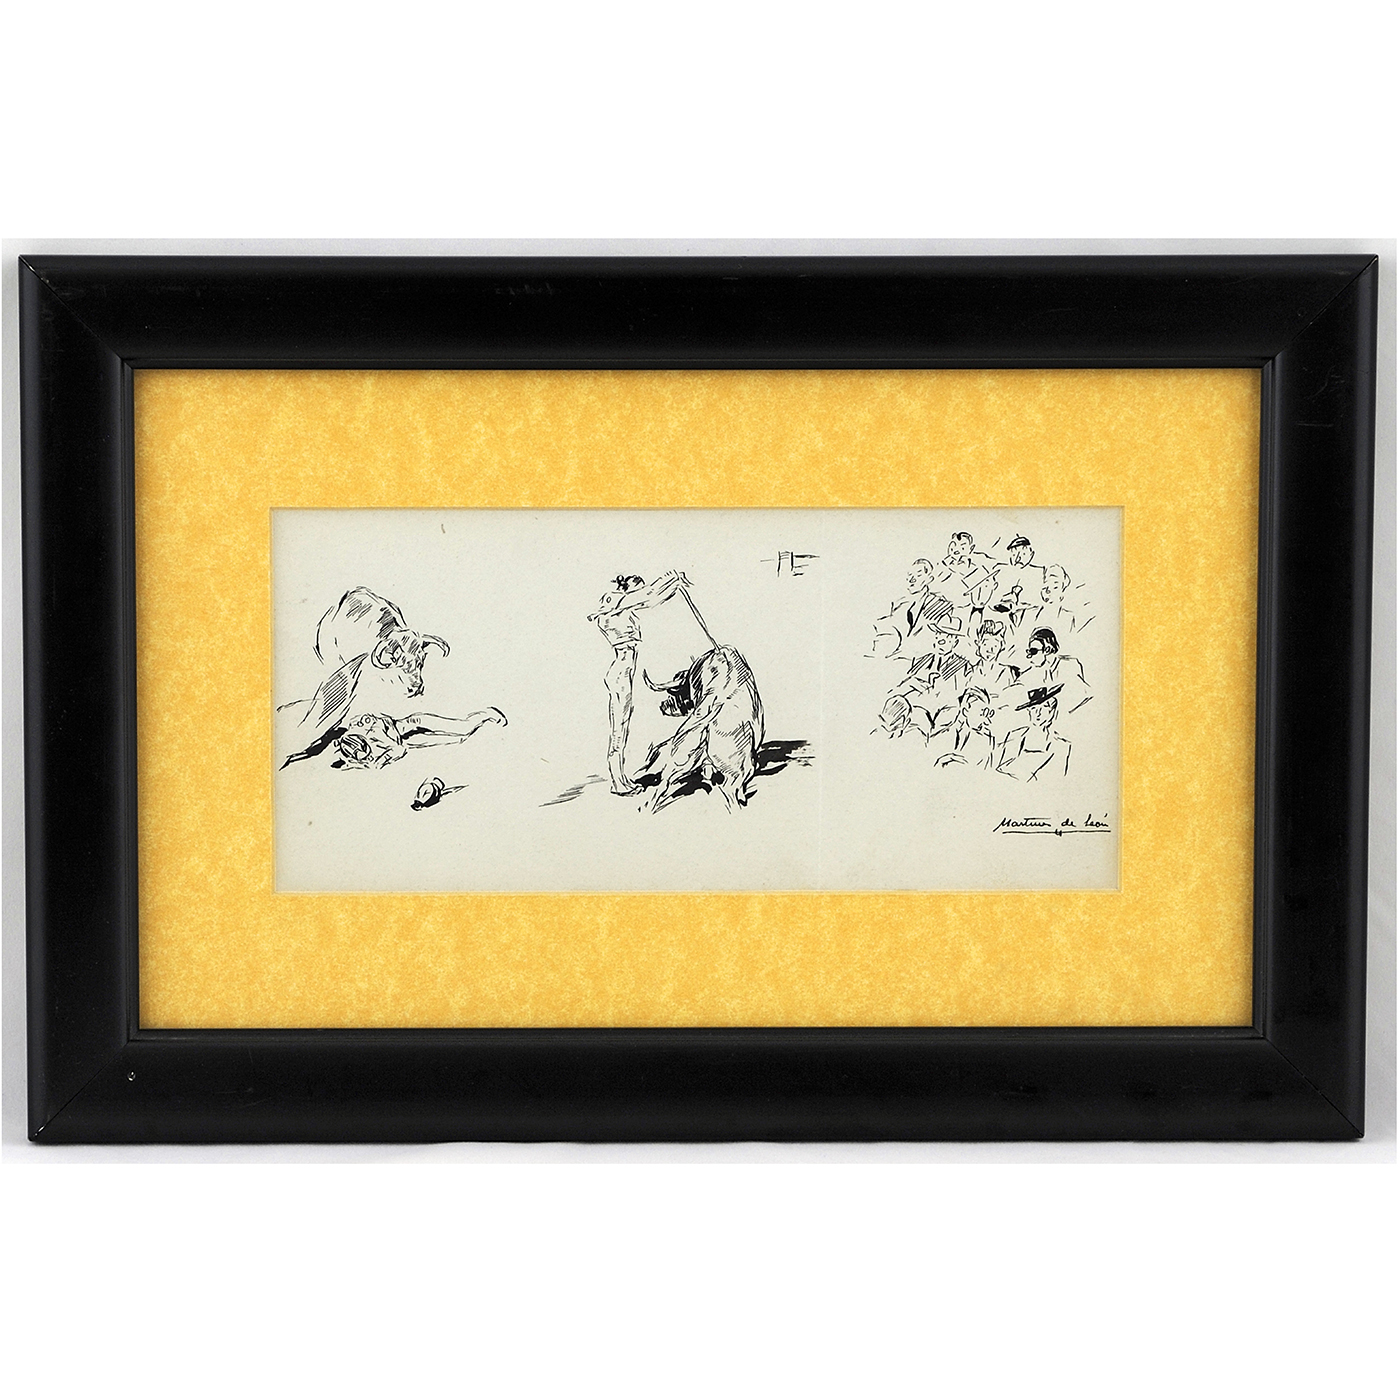 ANDRÉS MARTÍNEZ DE LEÓN. Pen drawing. "" Bullfighting scenes ""